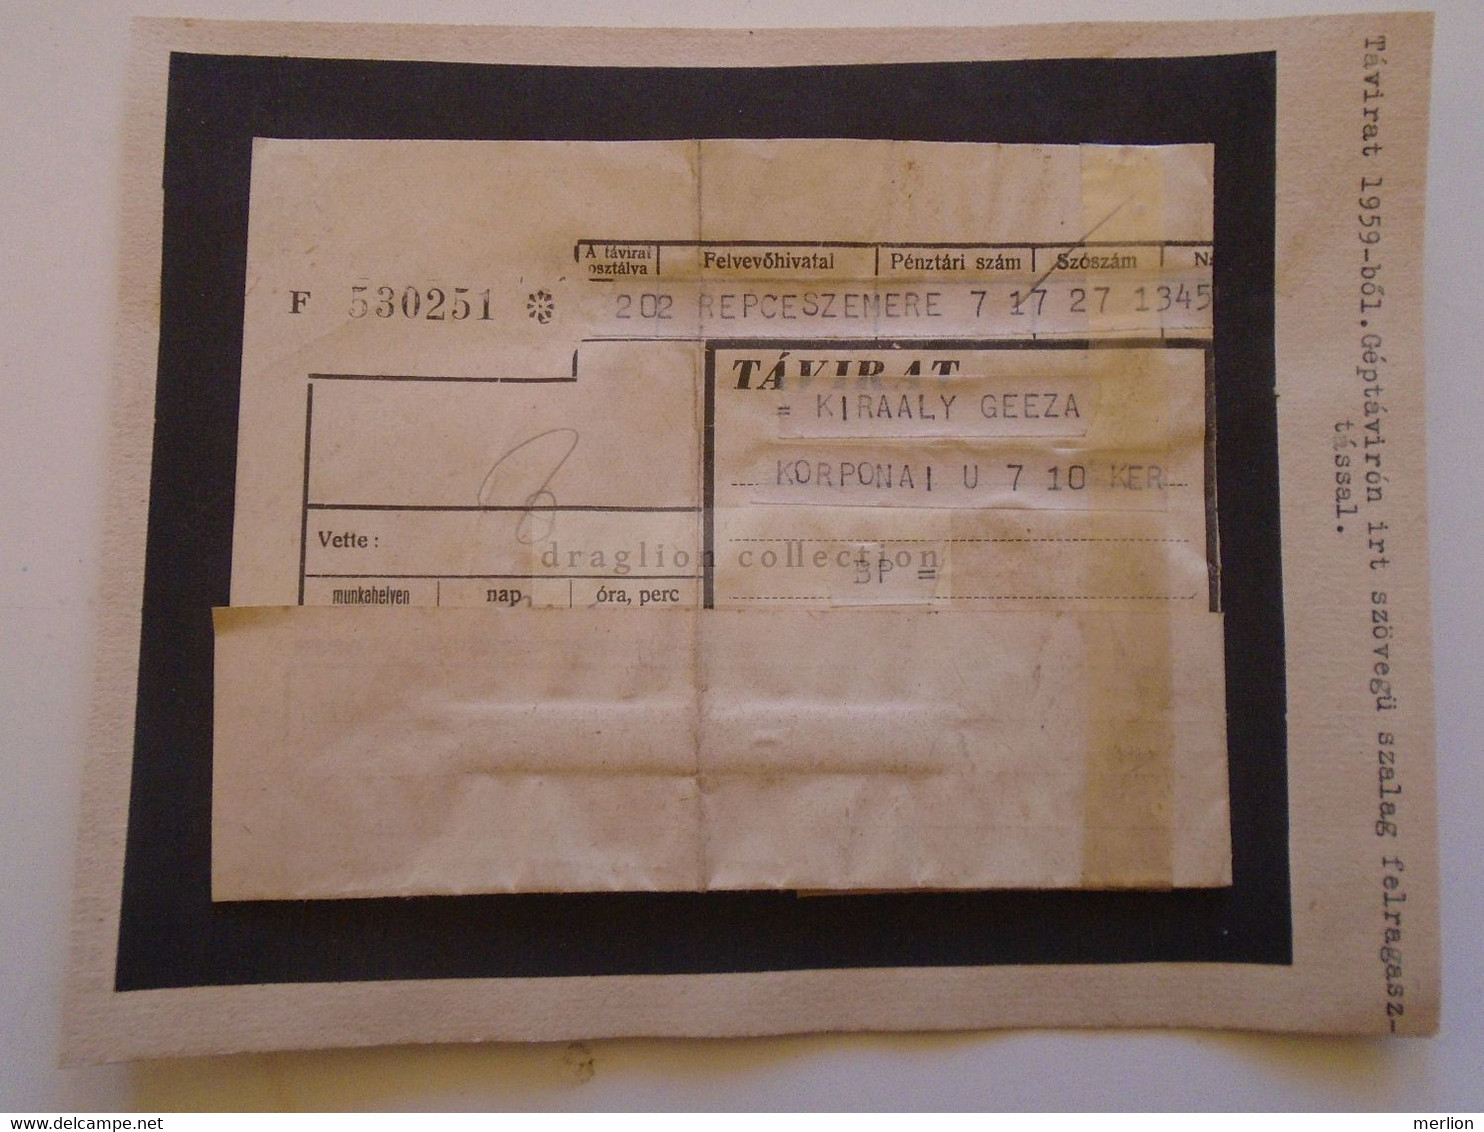 ZA120.2  HUNGARY  Tavirat Telegraph Telegram Répceszemere  1959 - Telegraphenmarken